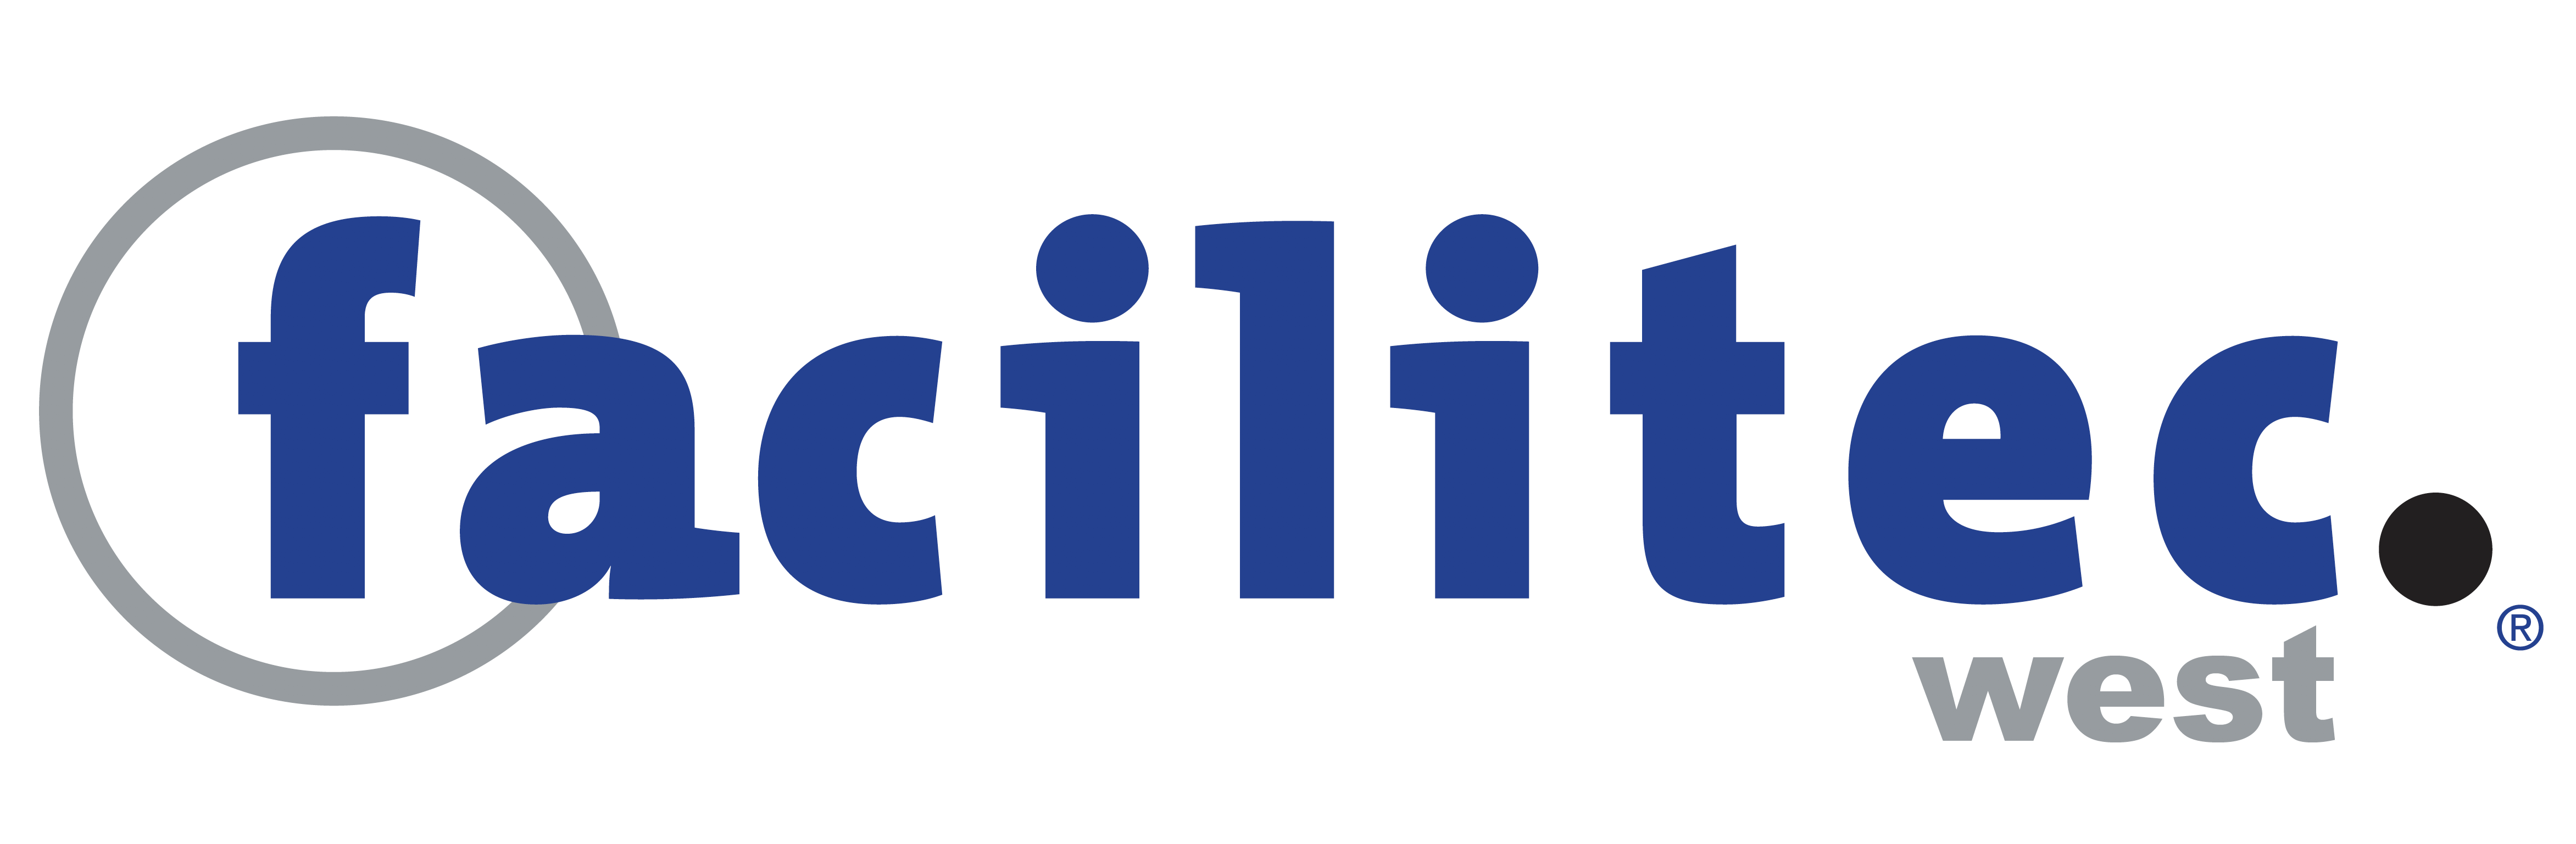 FacilitecWest_Logo